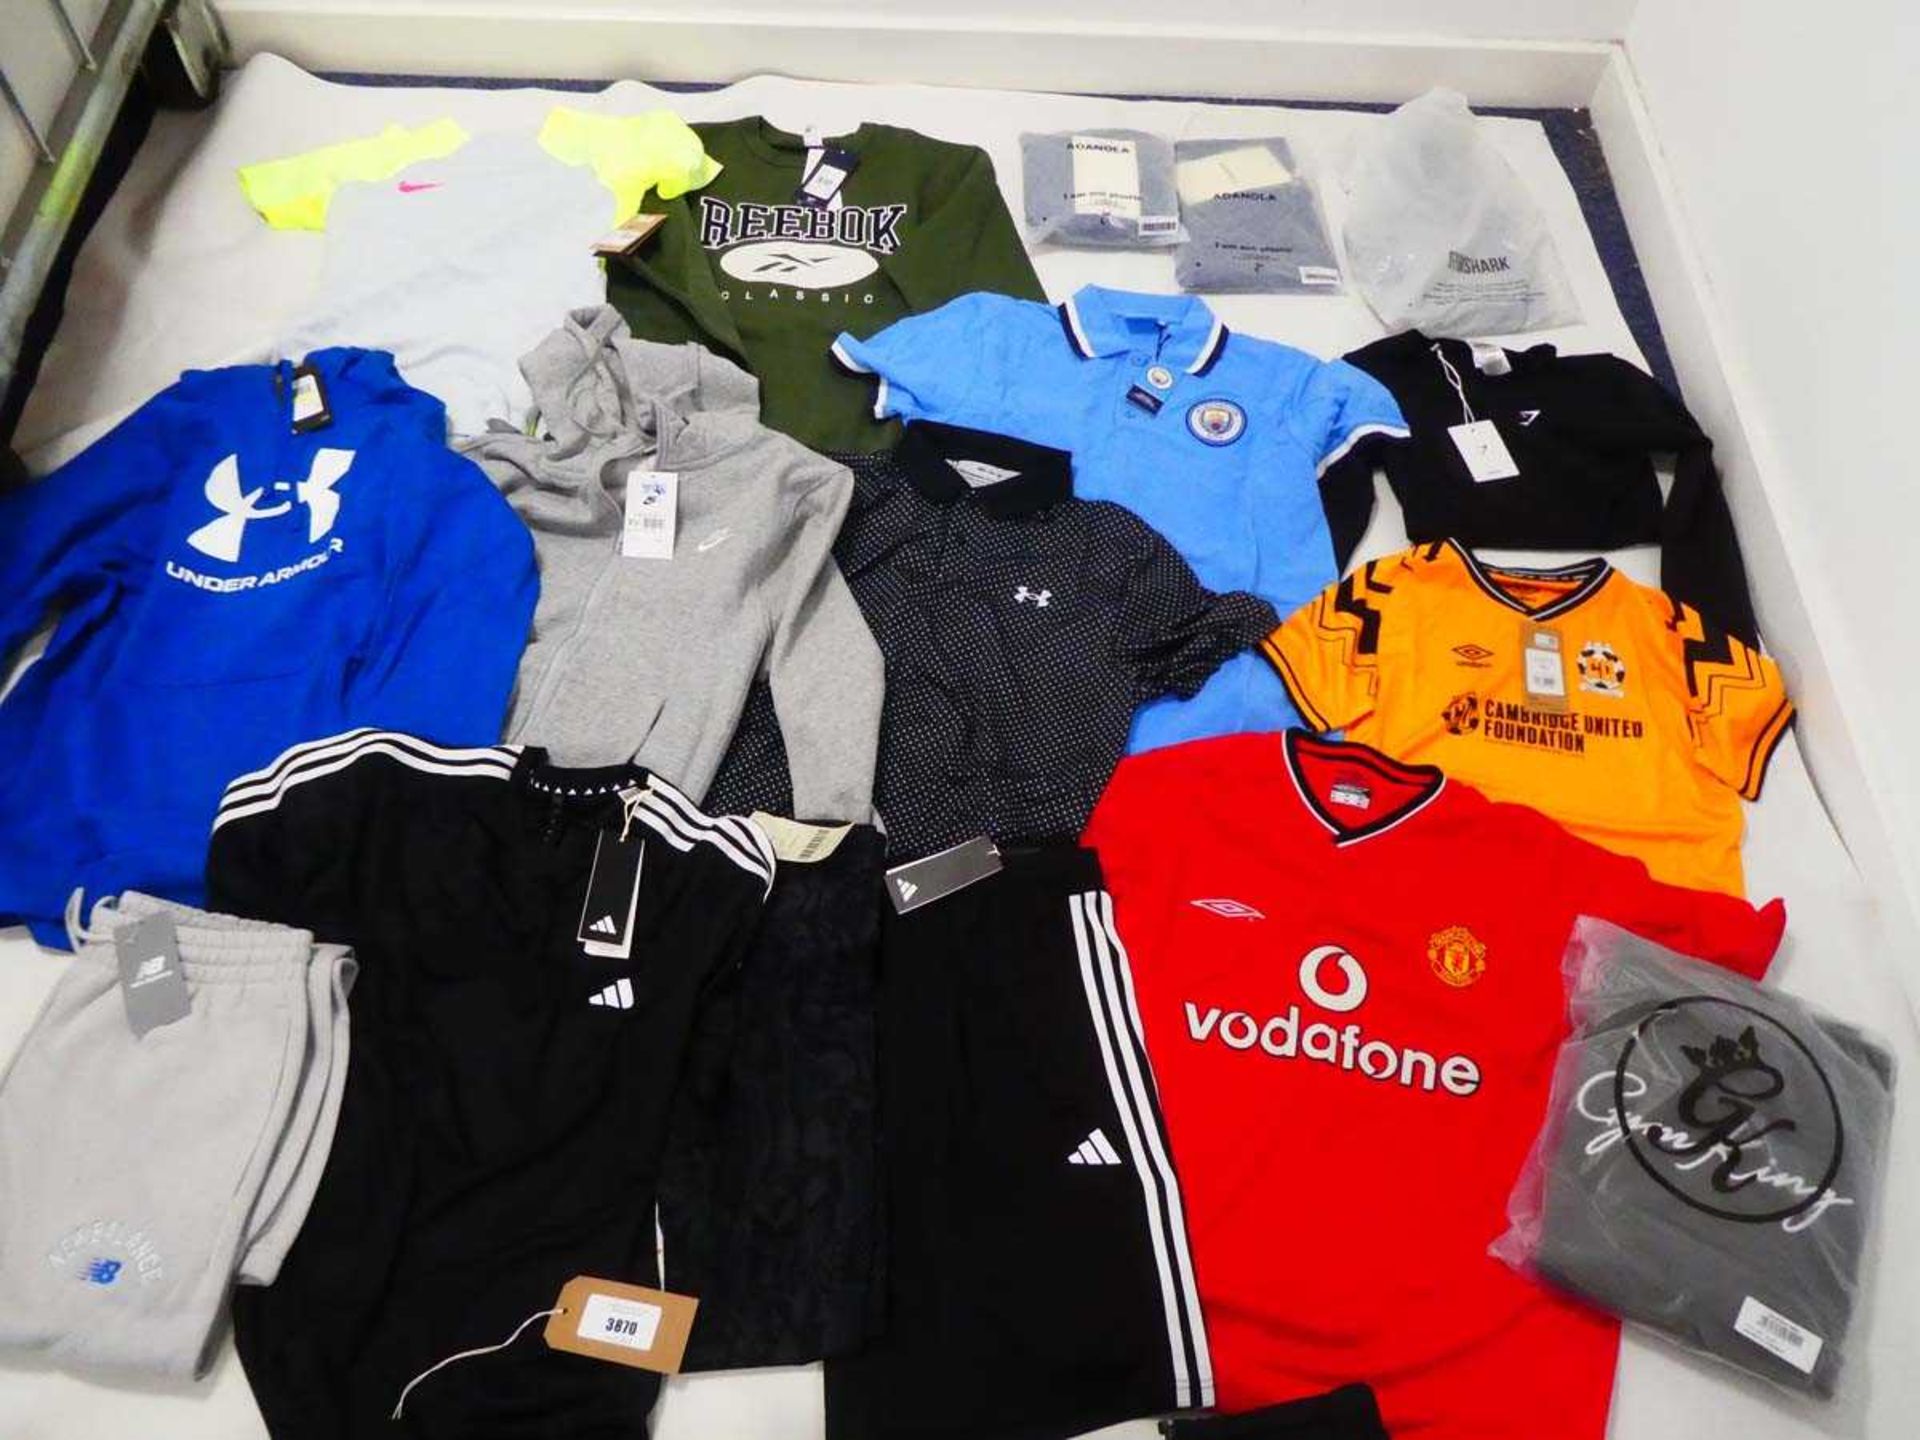 +VAT Selection of sportswear to include Gym Shark, Adonola, Nike, etc